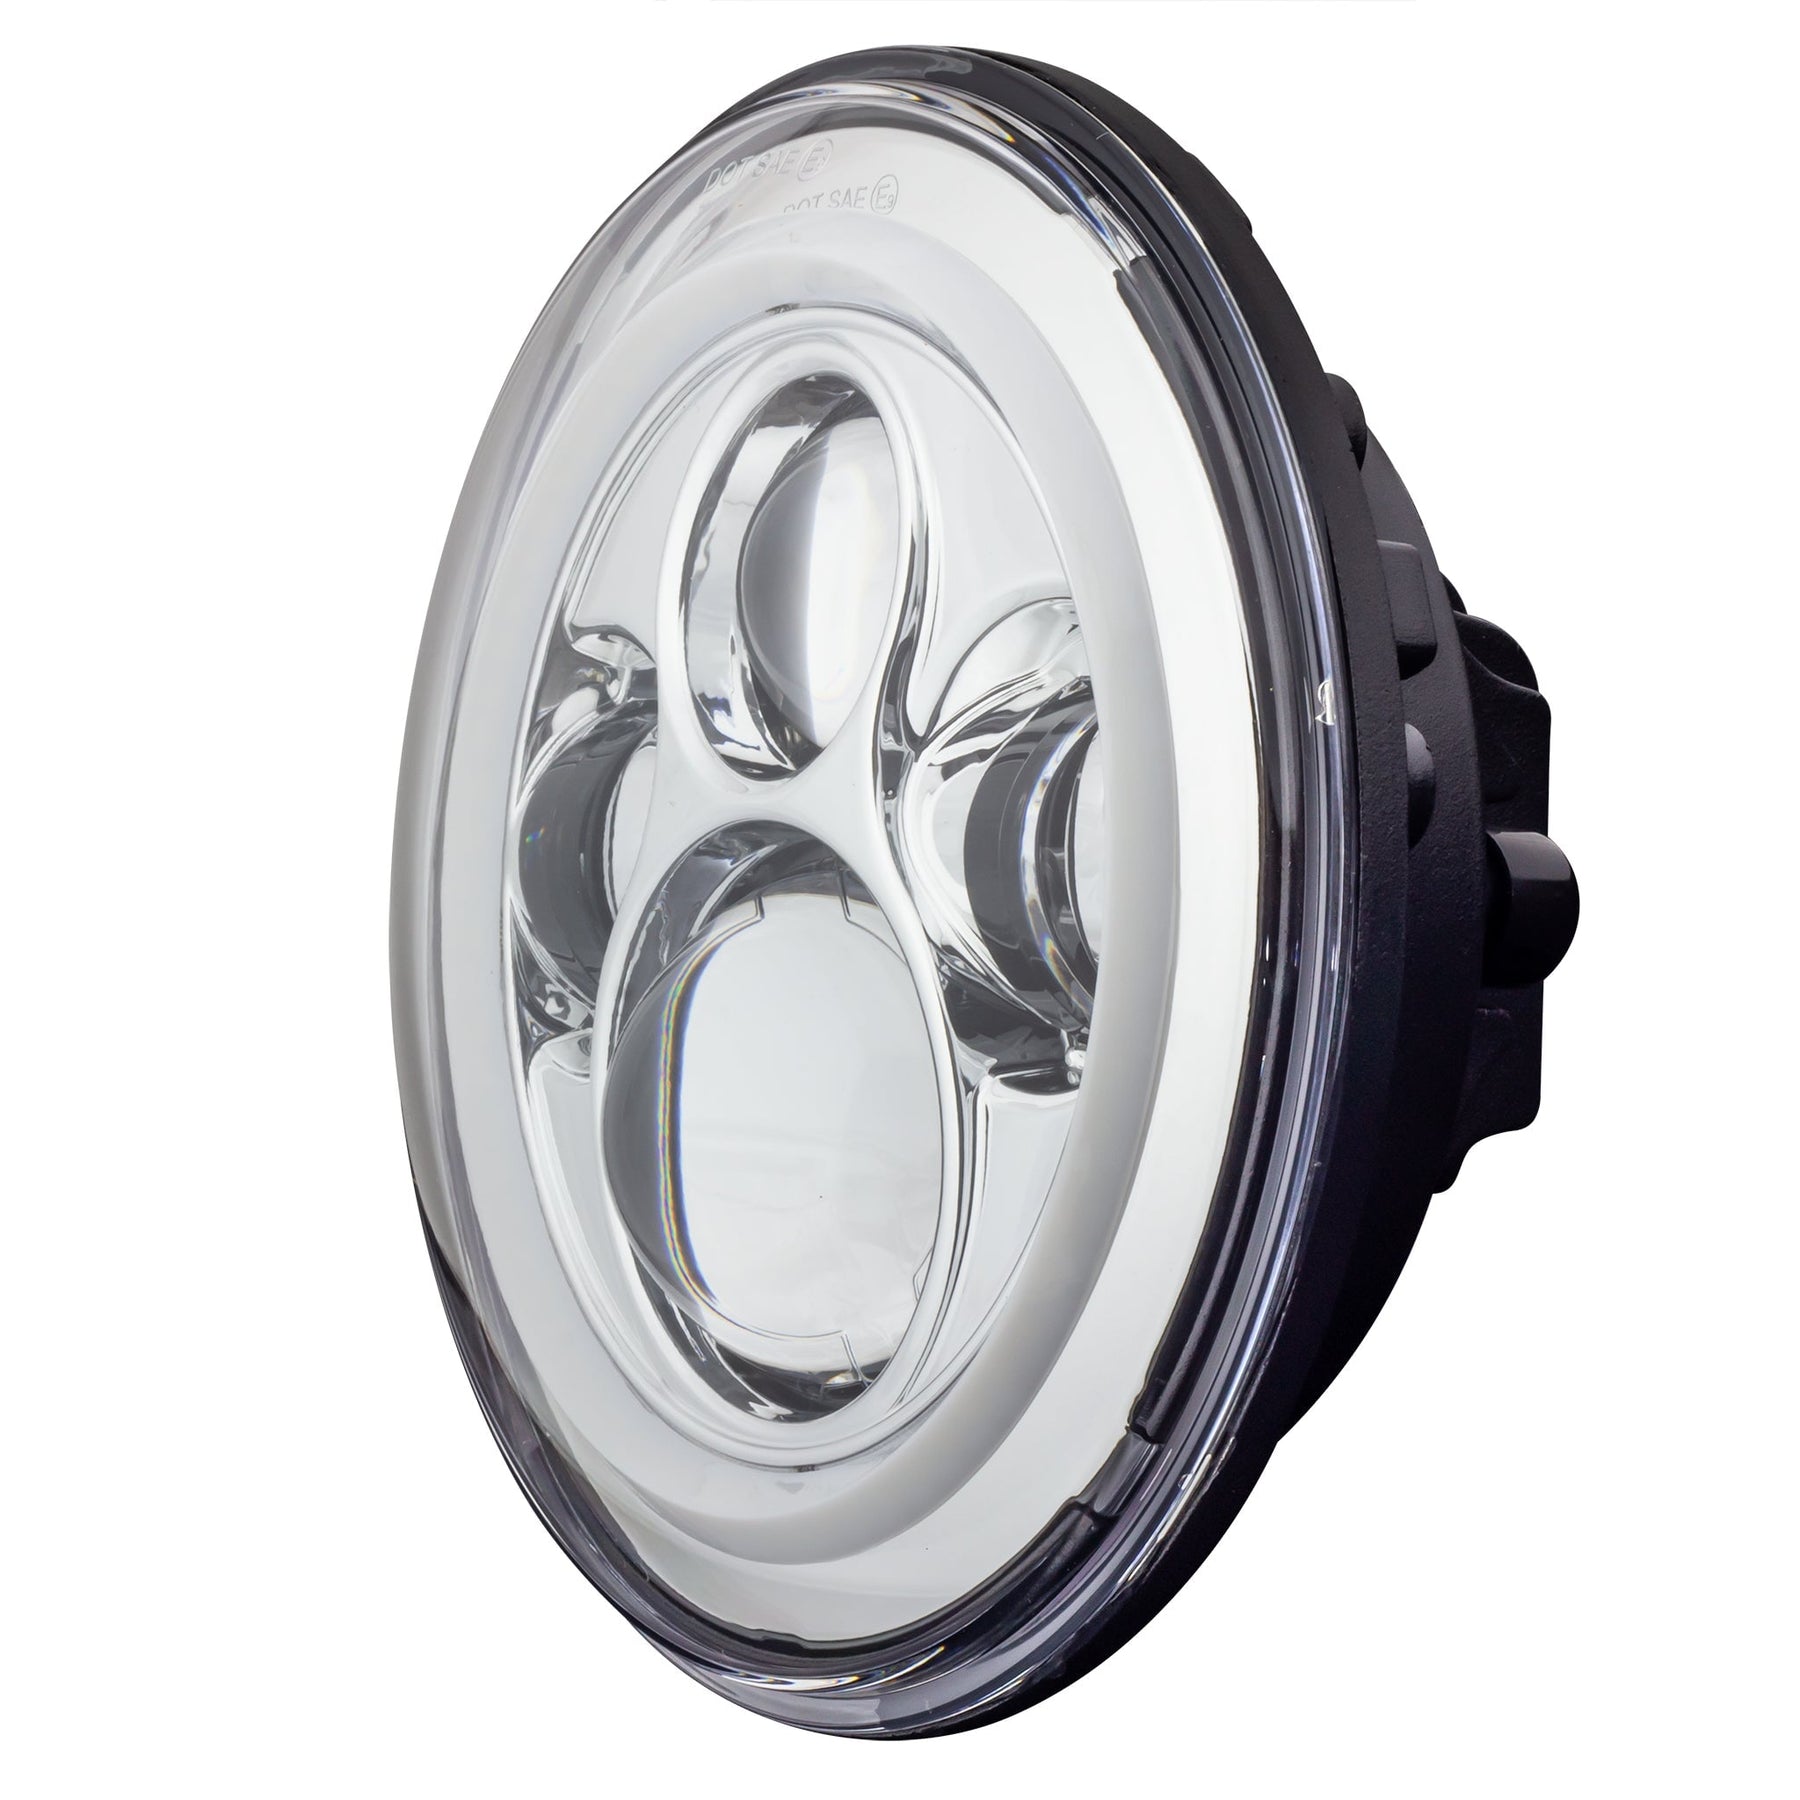 Eagle Lights 7" LED Headlight with LED Halo Ring for Harley Davidson and Indian Motorcycles - Generation I / Chrome Kit